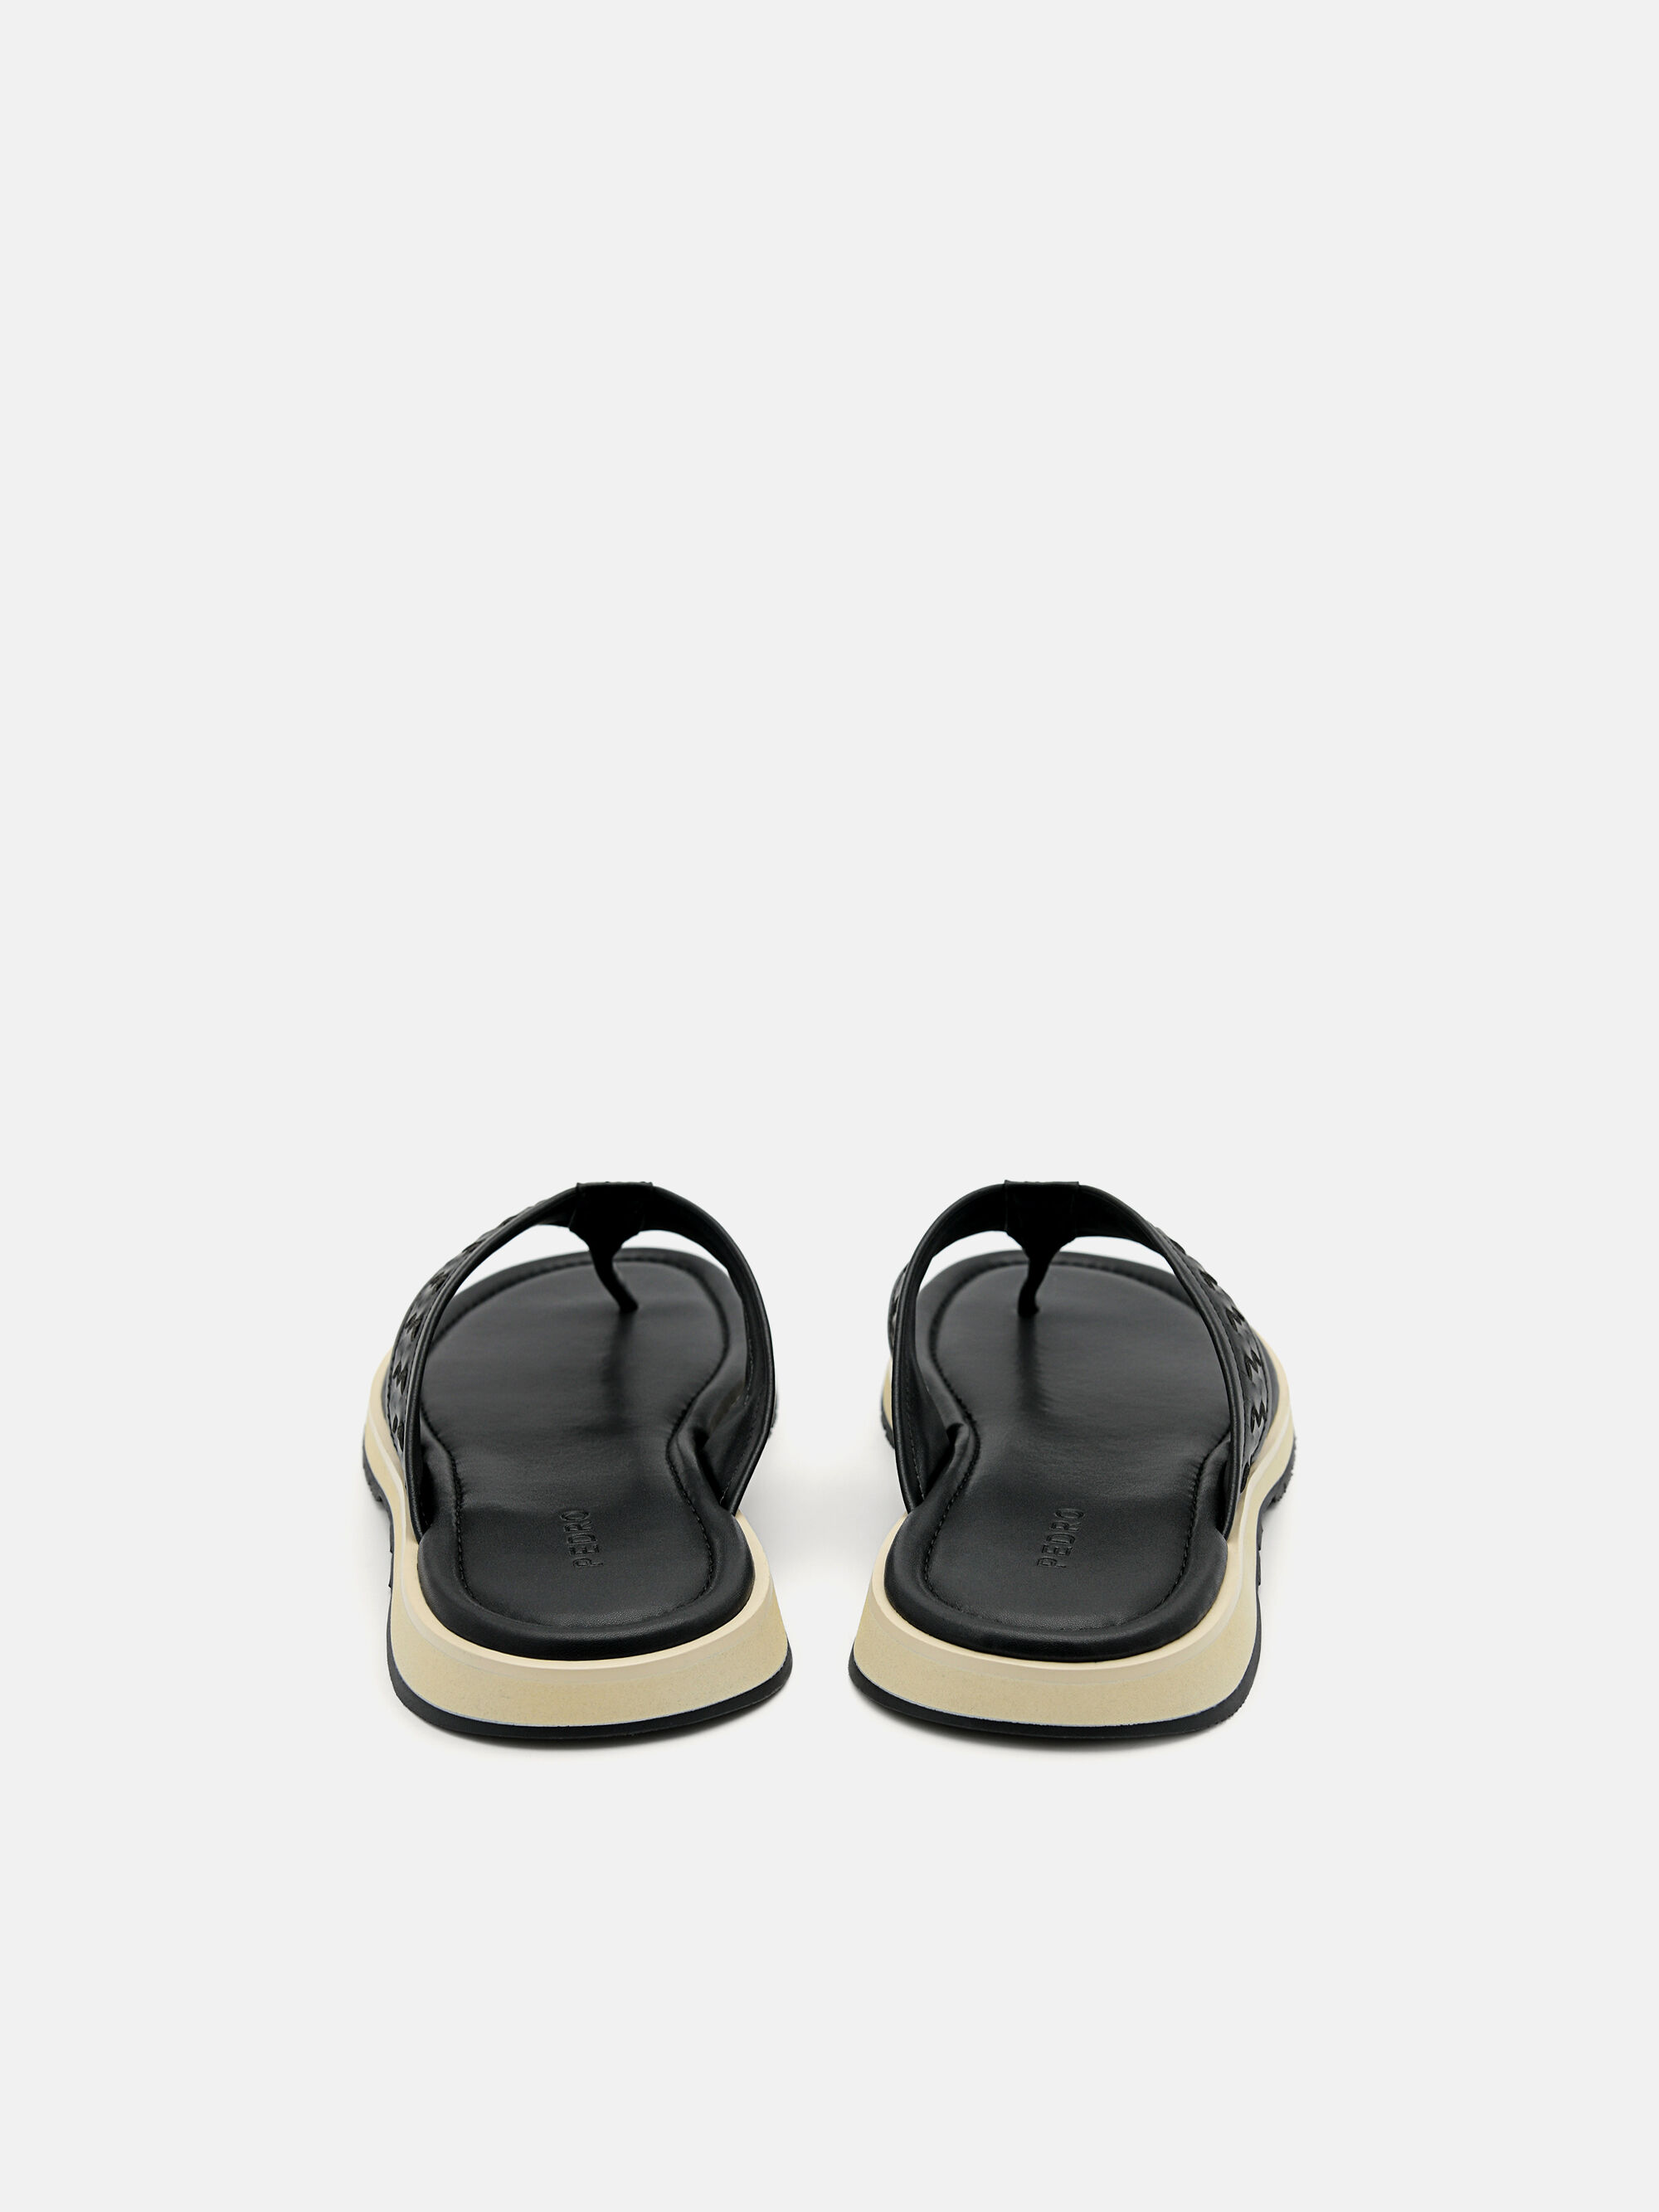 Woven Thong Sandals, Black